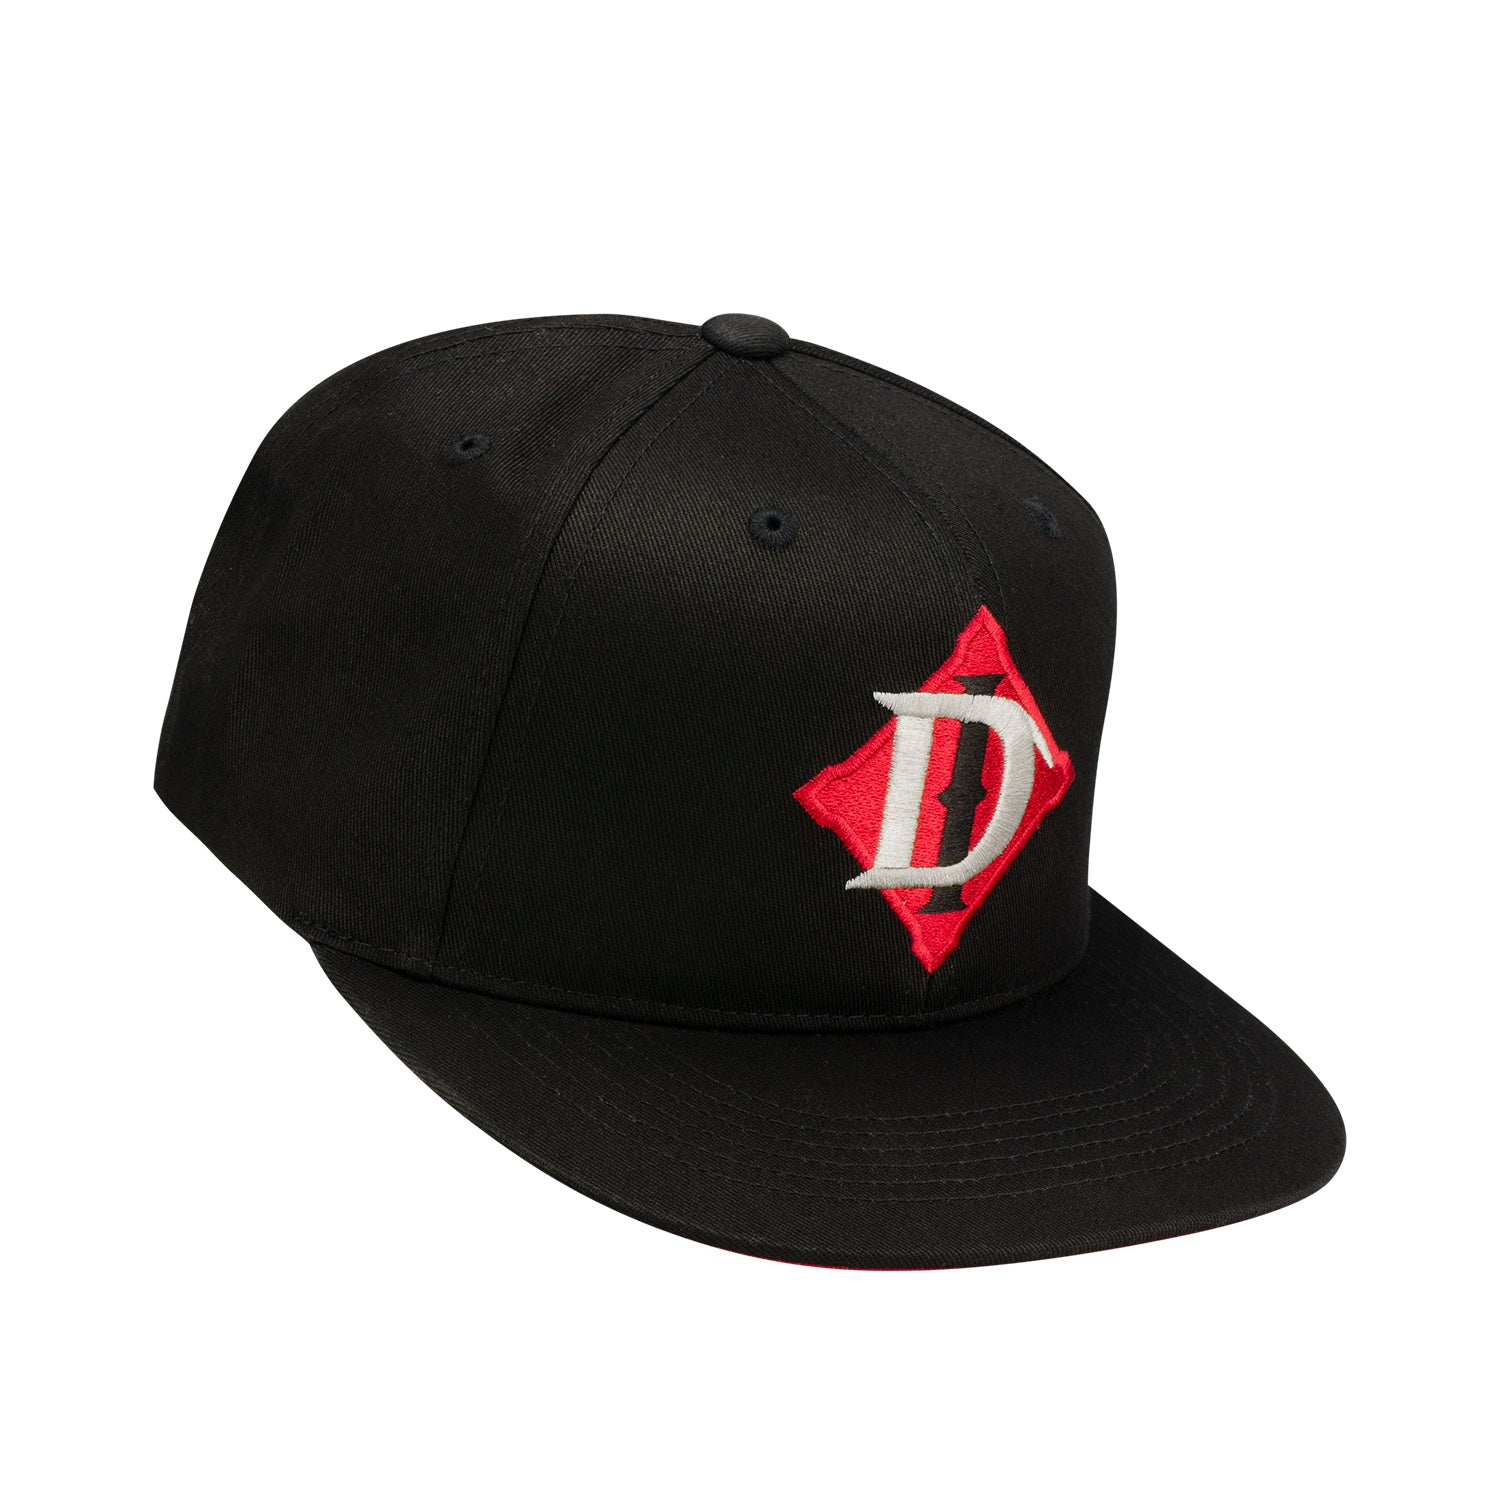 Diablo Immortal Black Flatbill Snapback Hat - Front Right Side View